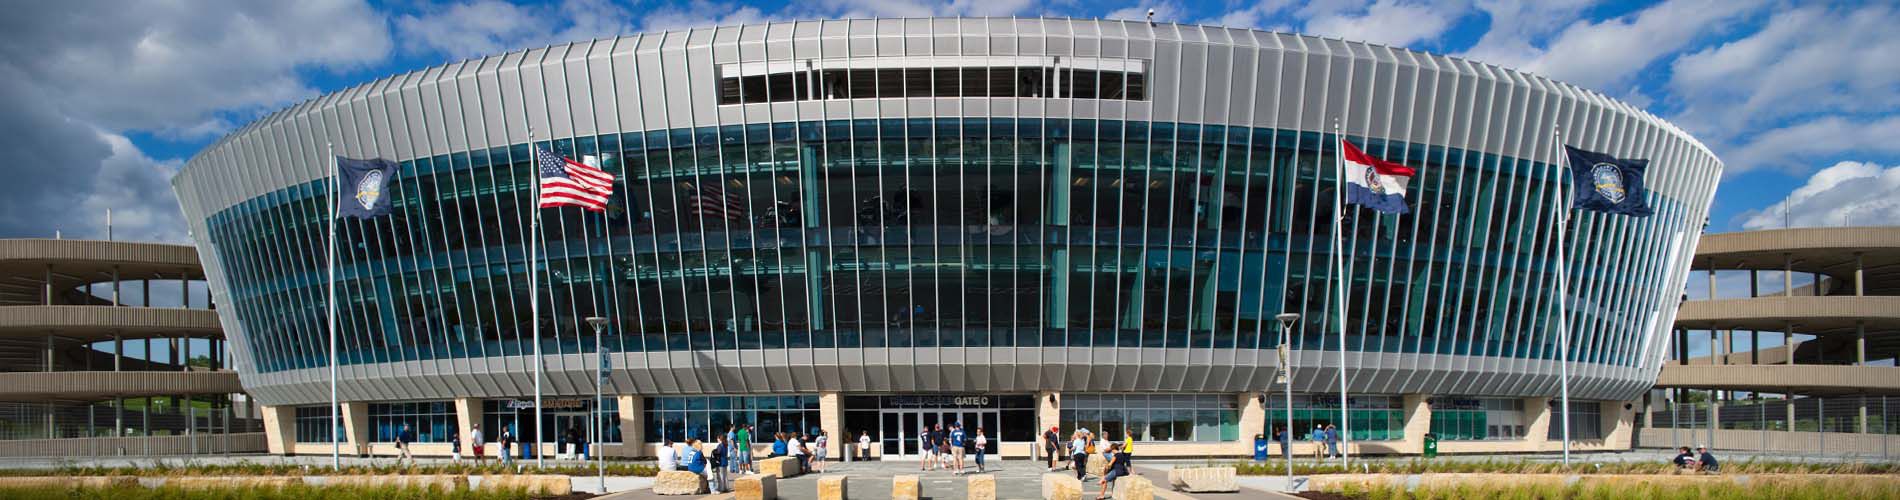 McNICHOLS® Case Study - Kauffman Stadium in Kansas City | McNICHOLS®